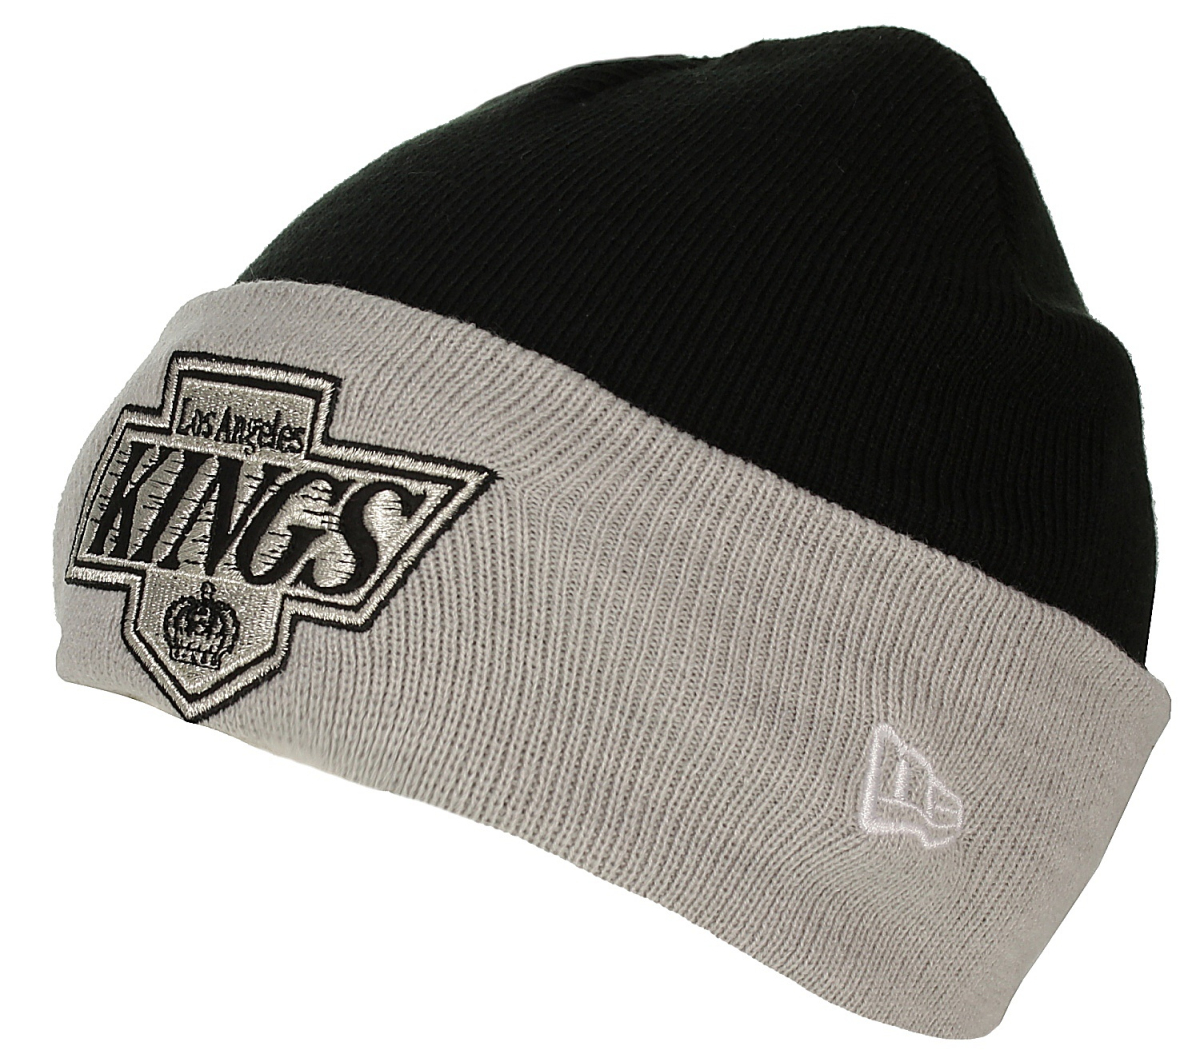 Los Angeles Kings czapka zimowa New Era Original Over